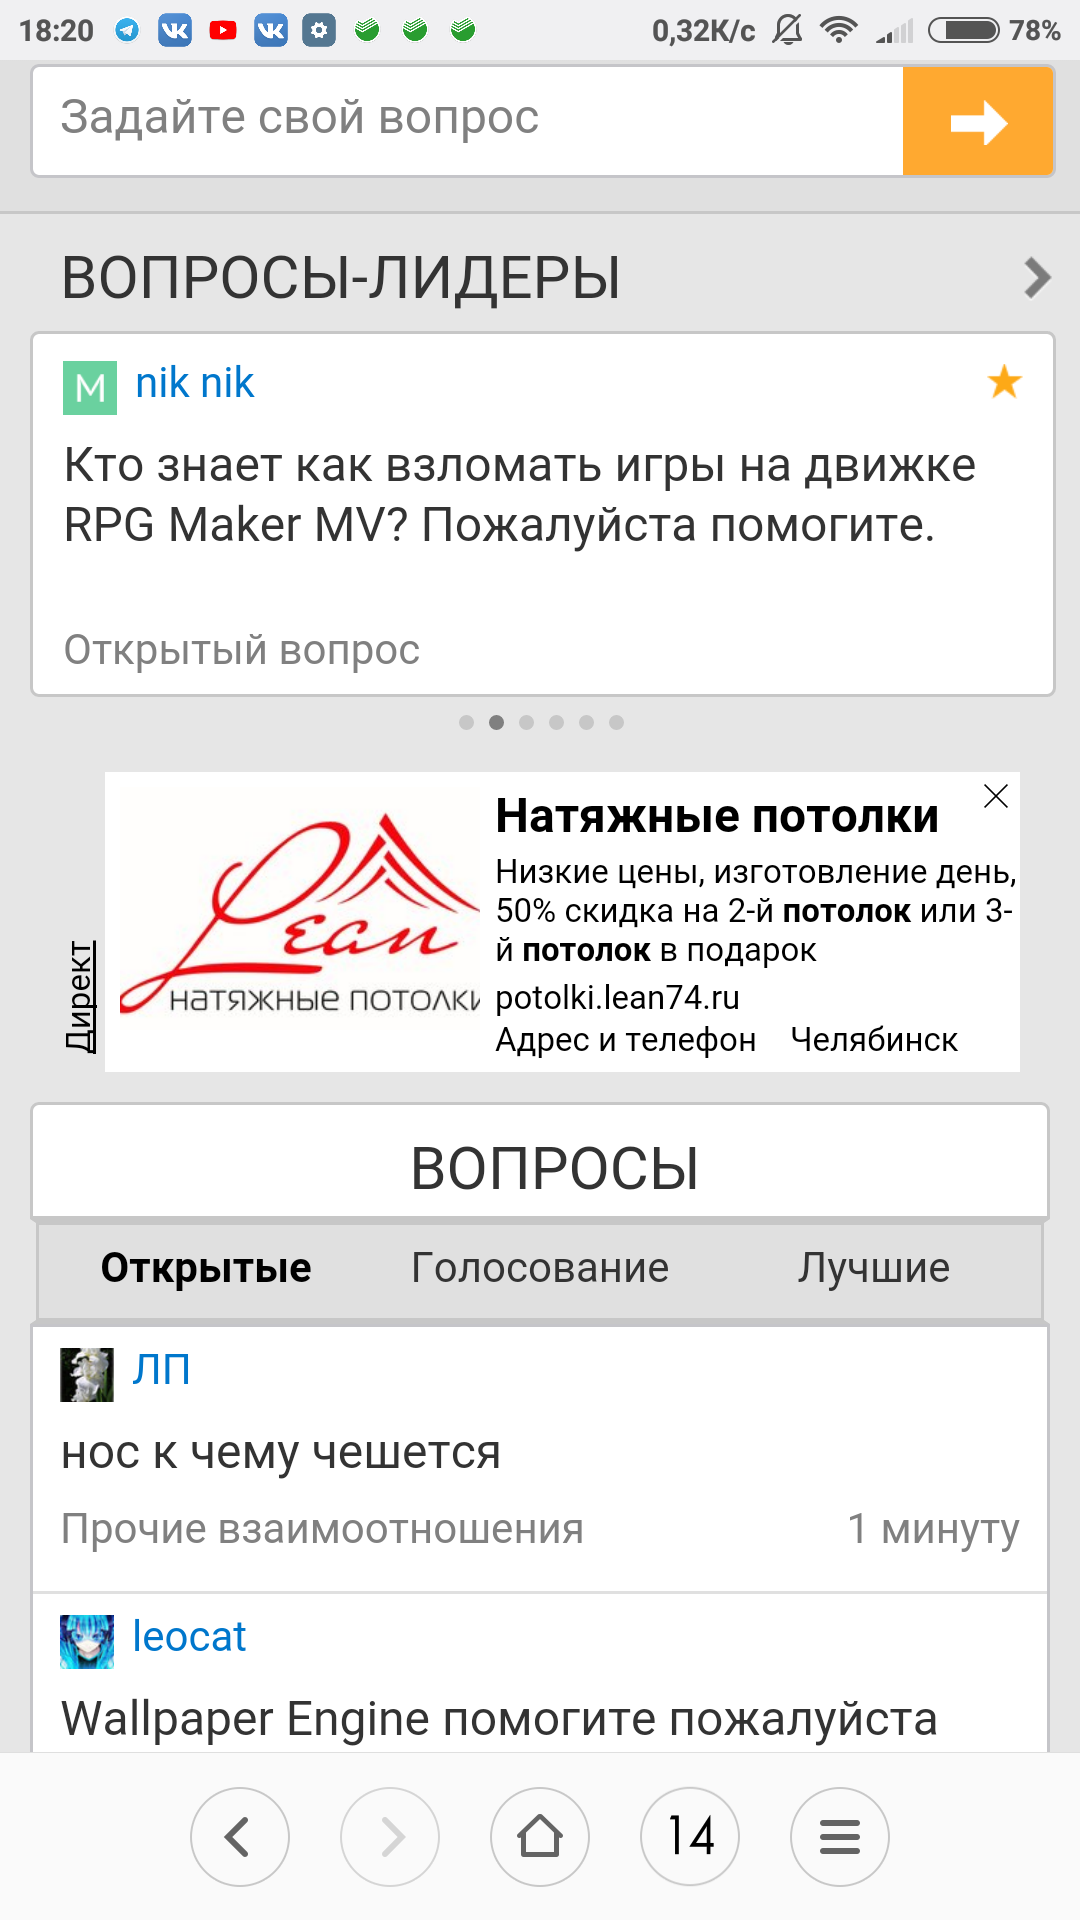 Яндекс директ бан чаты реклама своего сайта